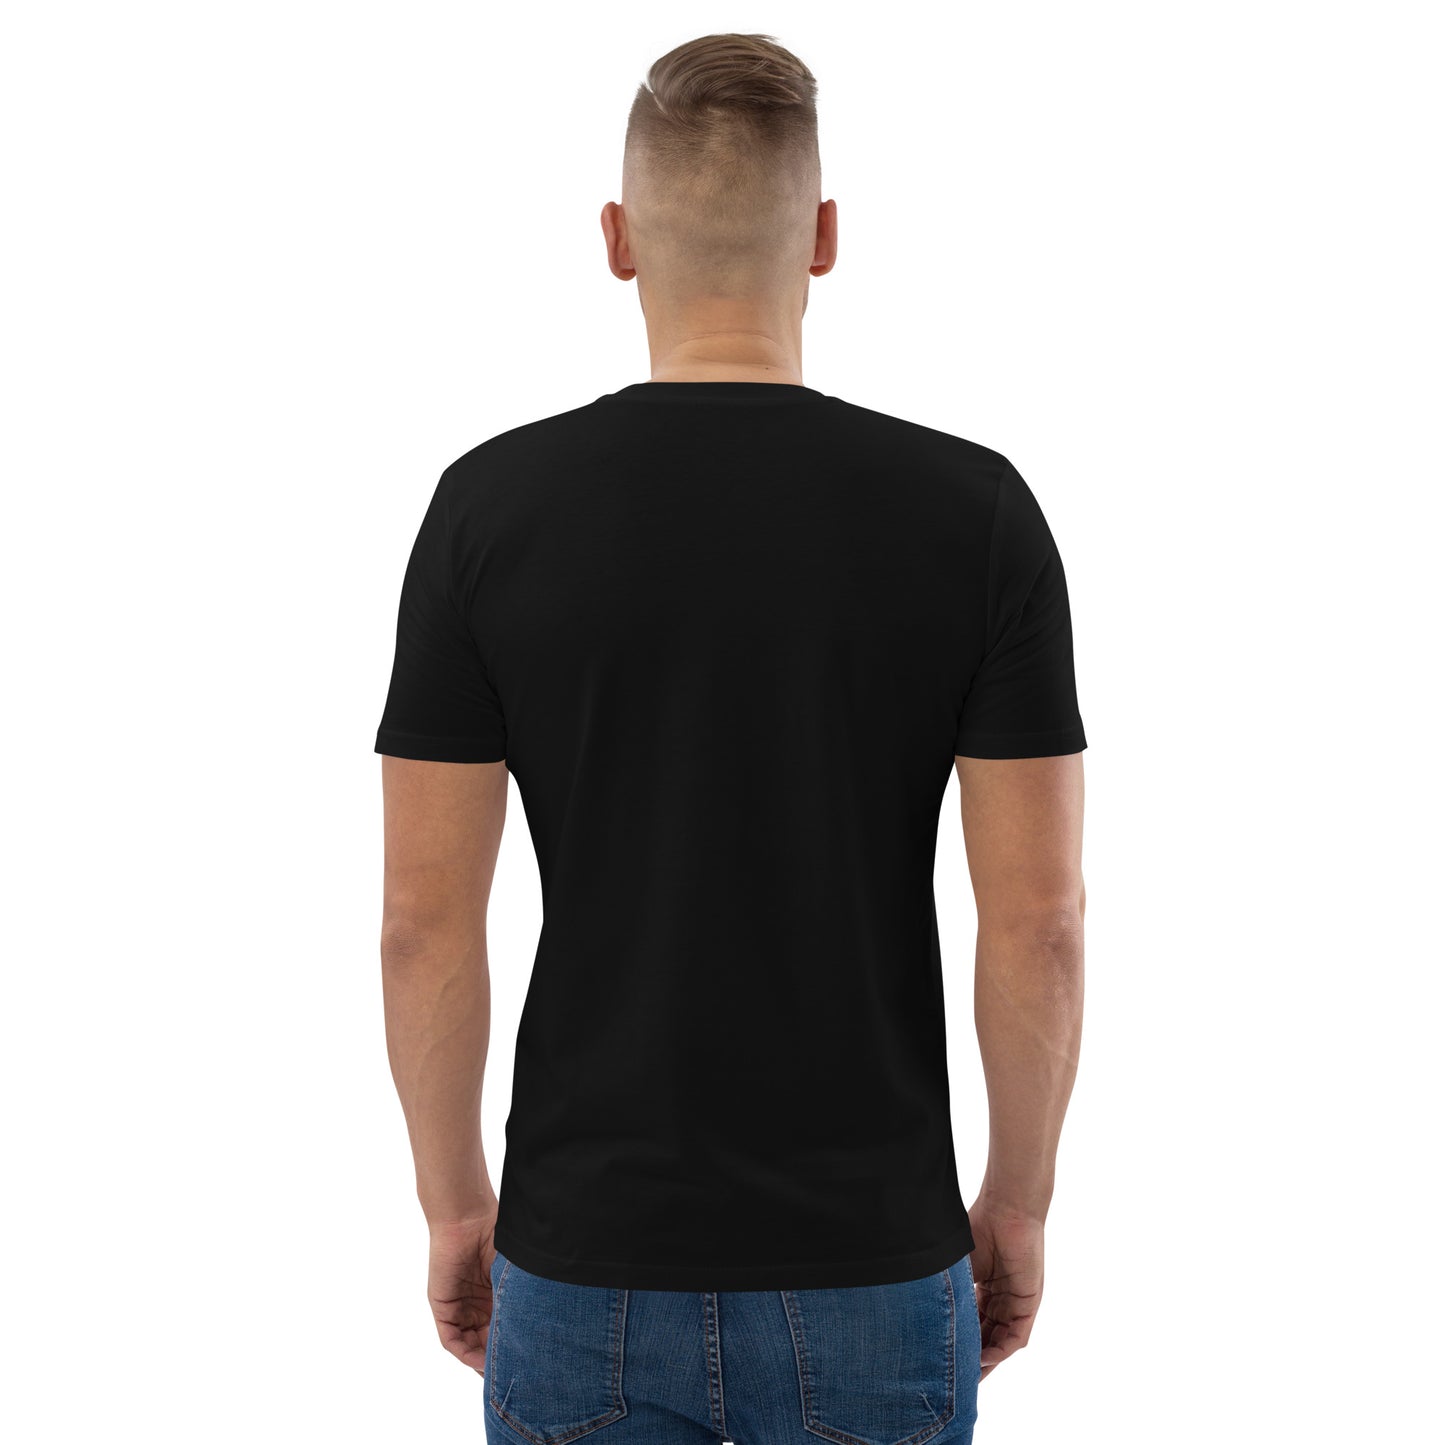 BE HAWK - T-Shirt (Unisex, Bio-Baumwolle)